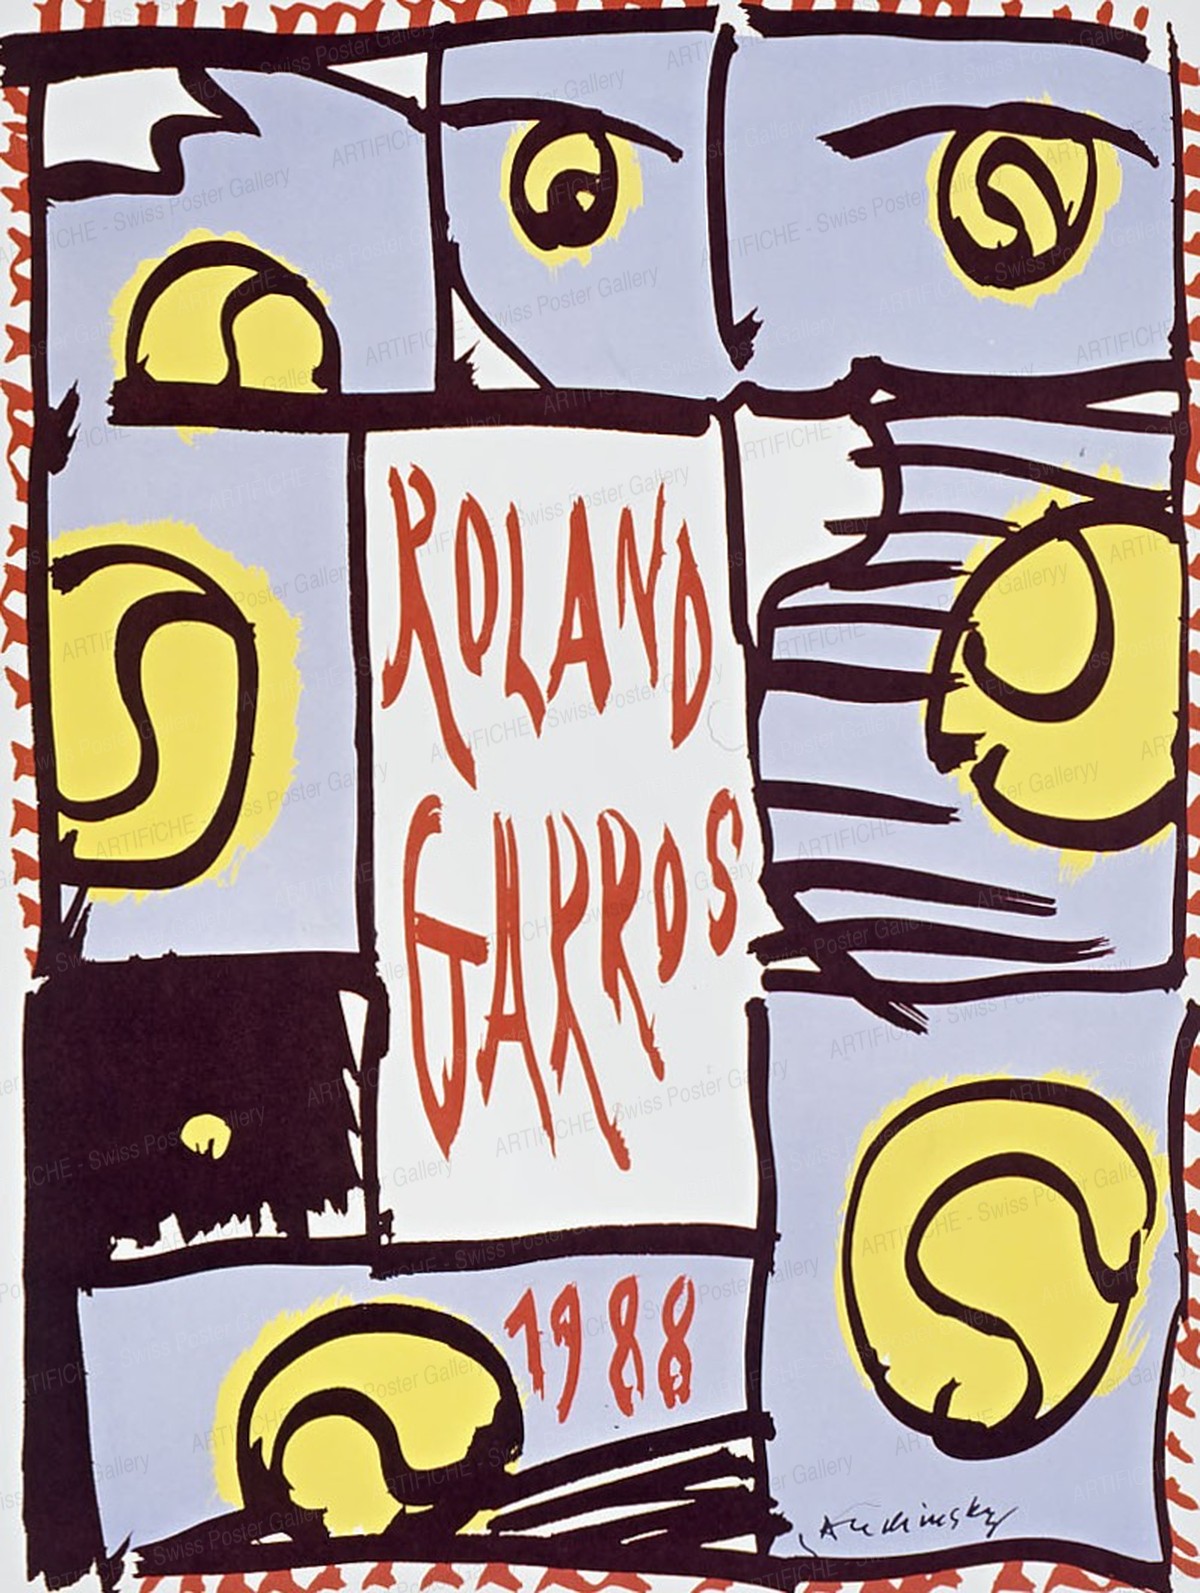 ROLAND GARROS 1988, Pierre Alechinsky